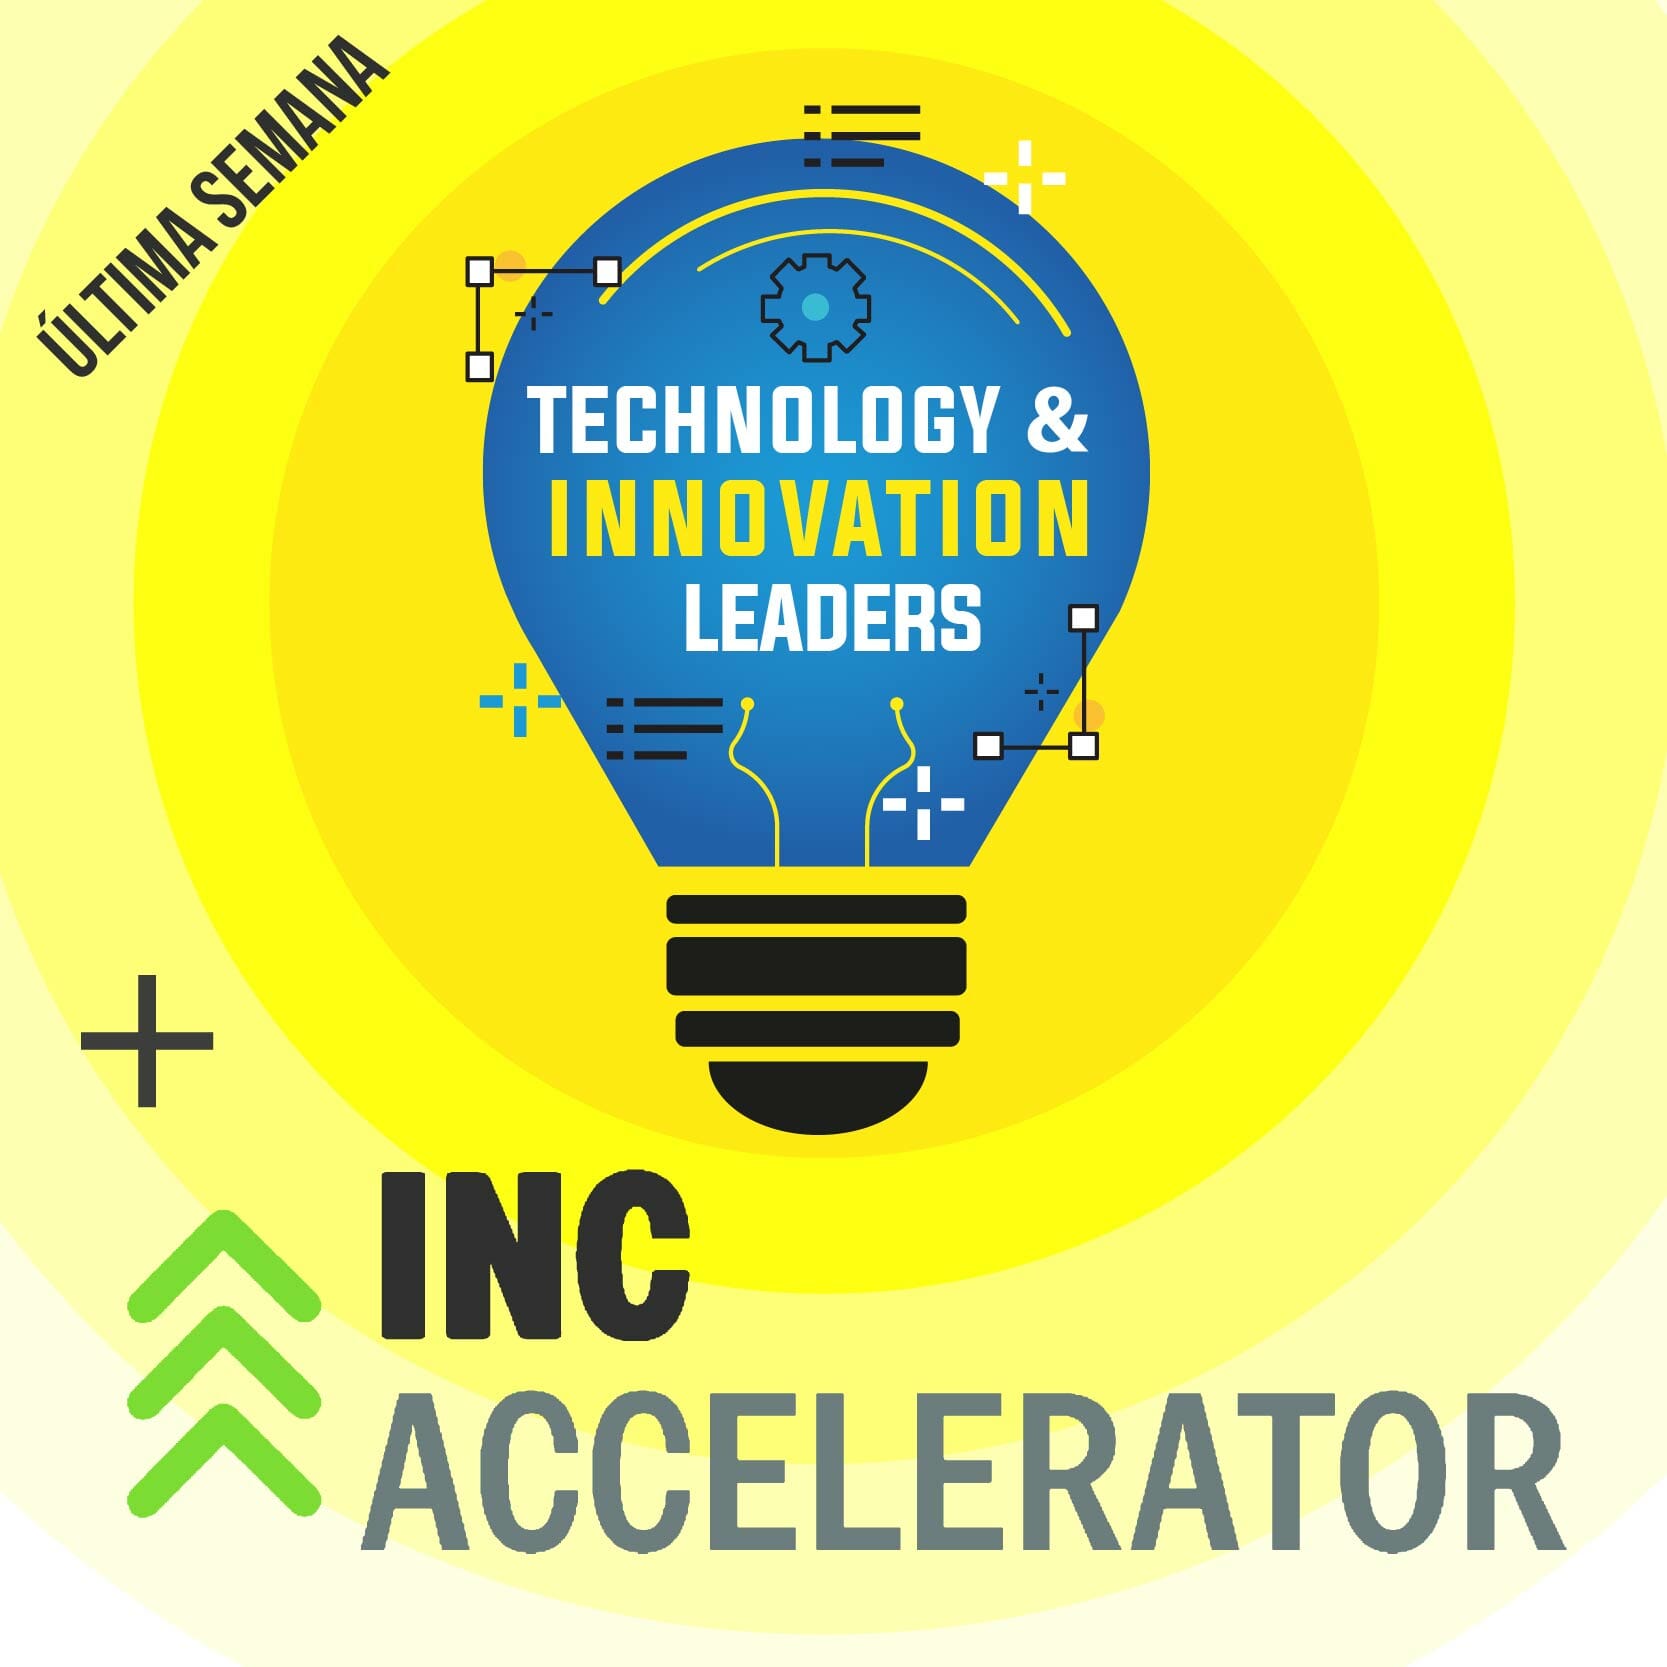 Technology & Innovation Leaders